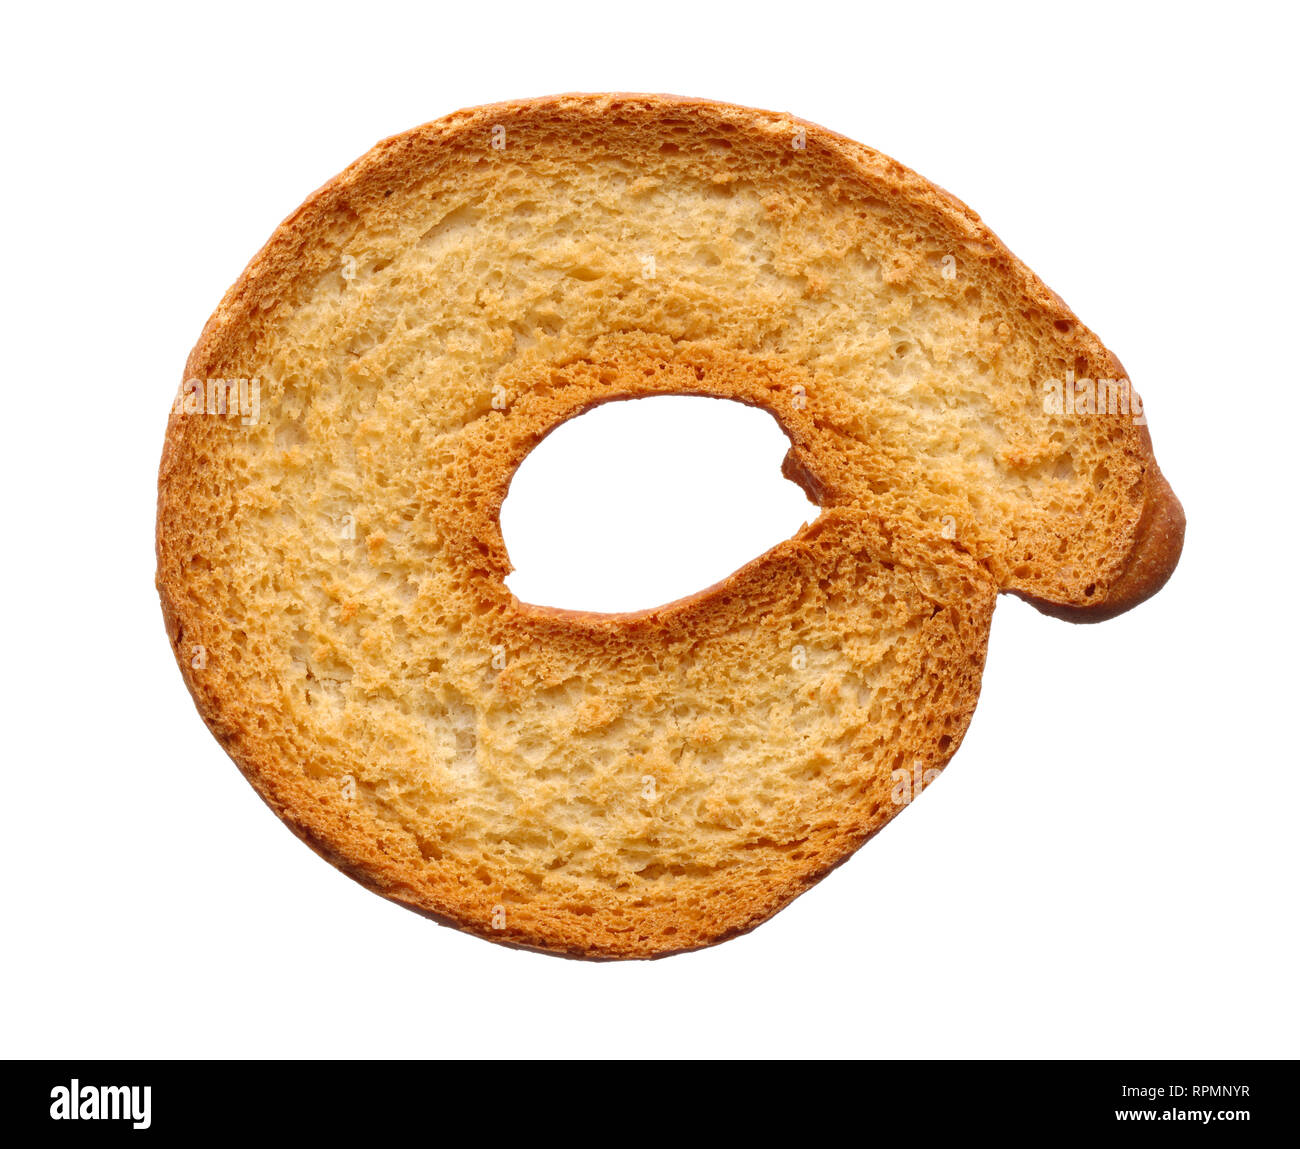 Cibo e bevande: singolo bagel arrosto, isolato su sfondo bianco Foto Stock